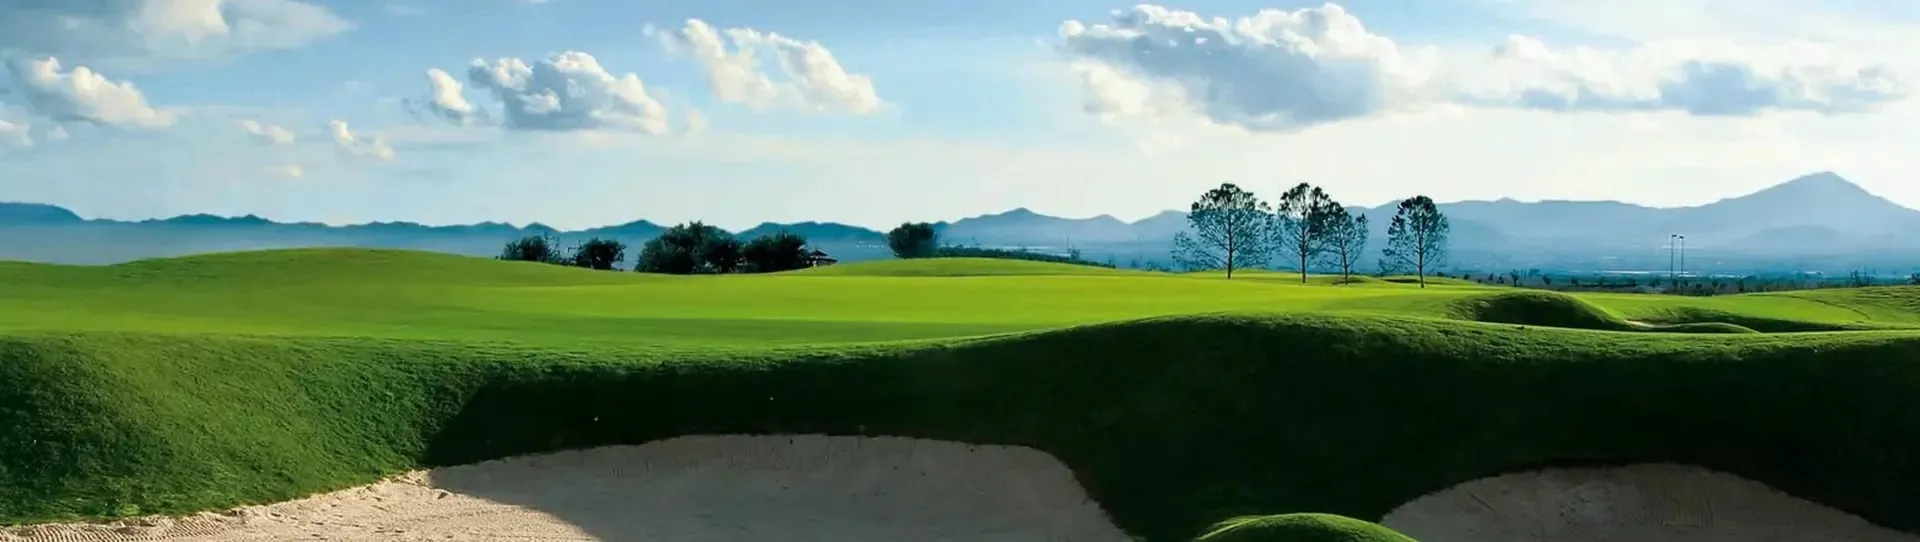 Spain golf courses - Hacienda del Alamo Golf Resort - Photo 1